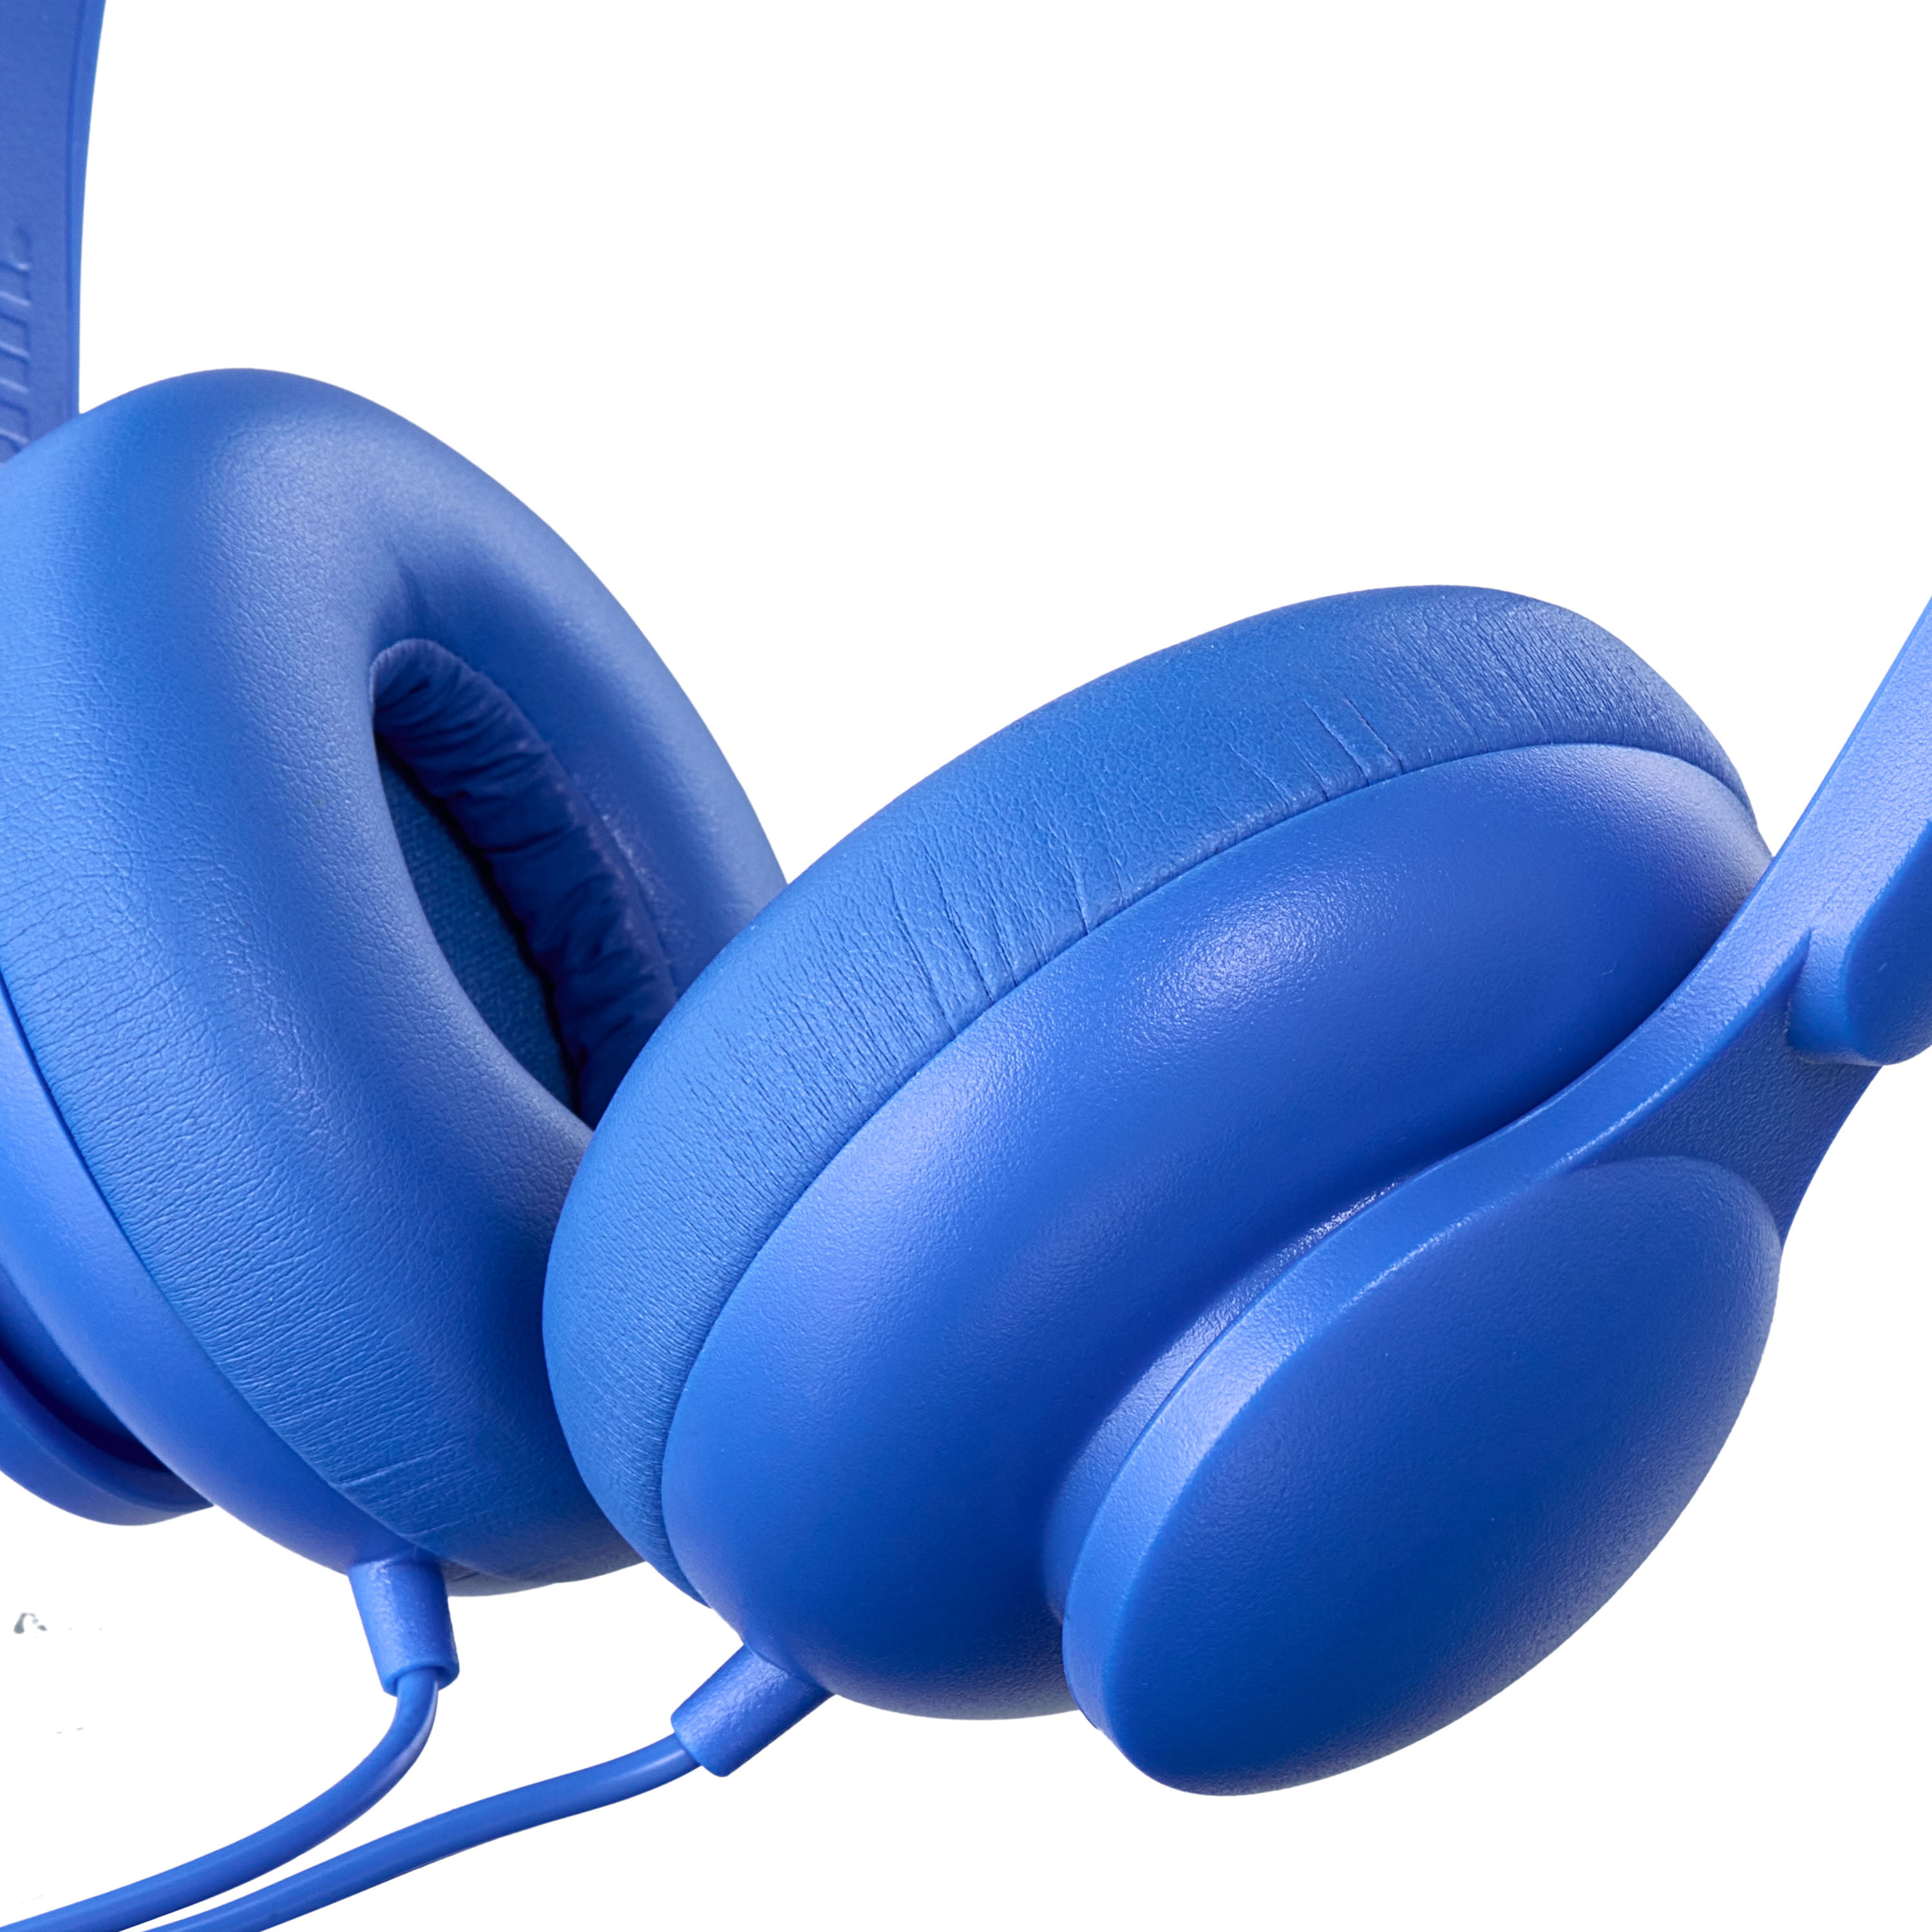 onn. Wired On-Ear Headphones - Blue